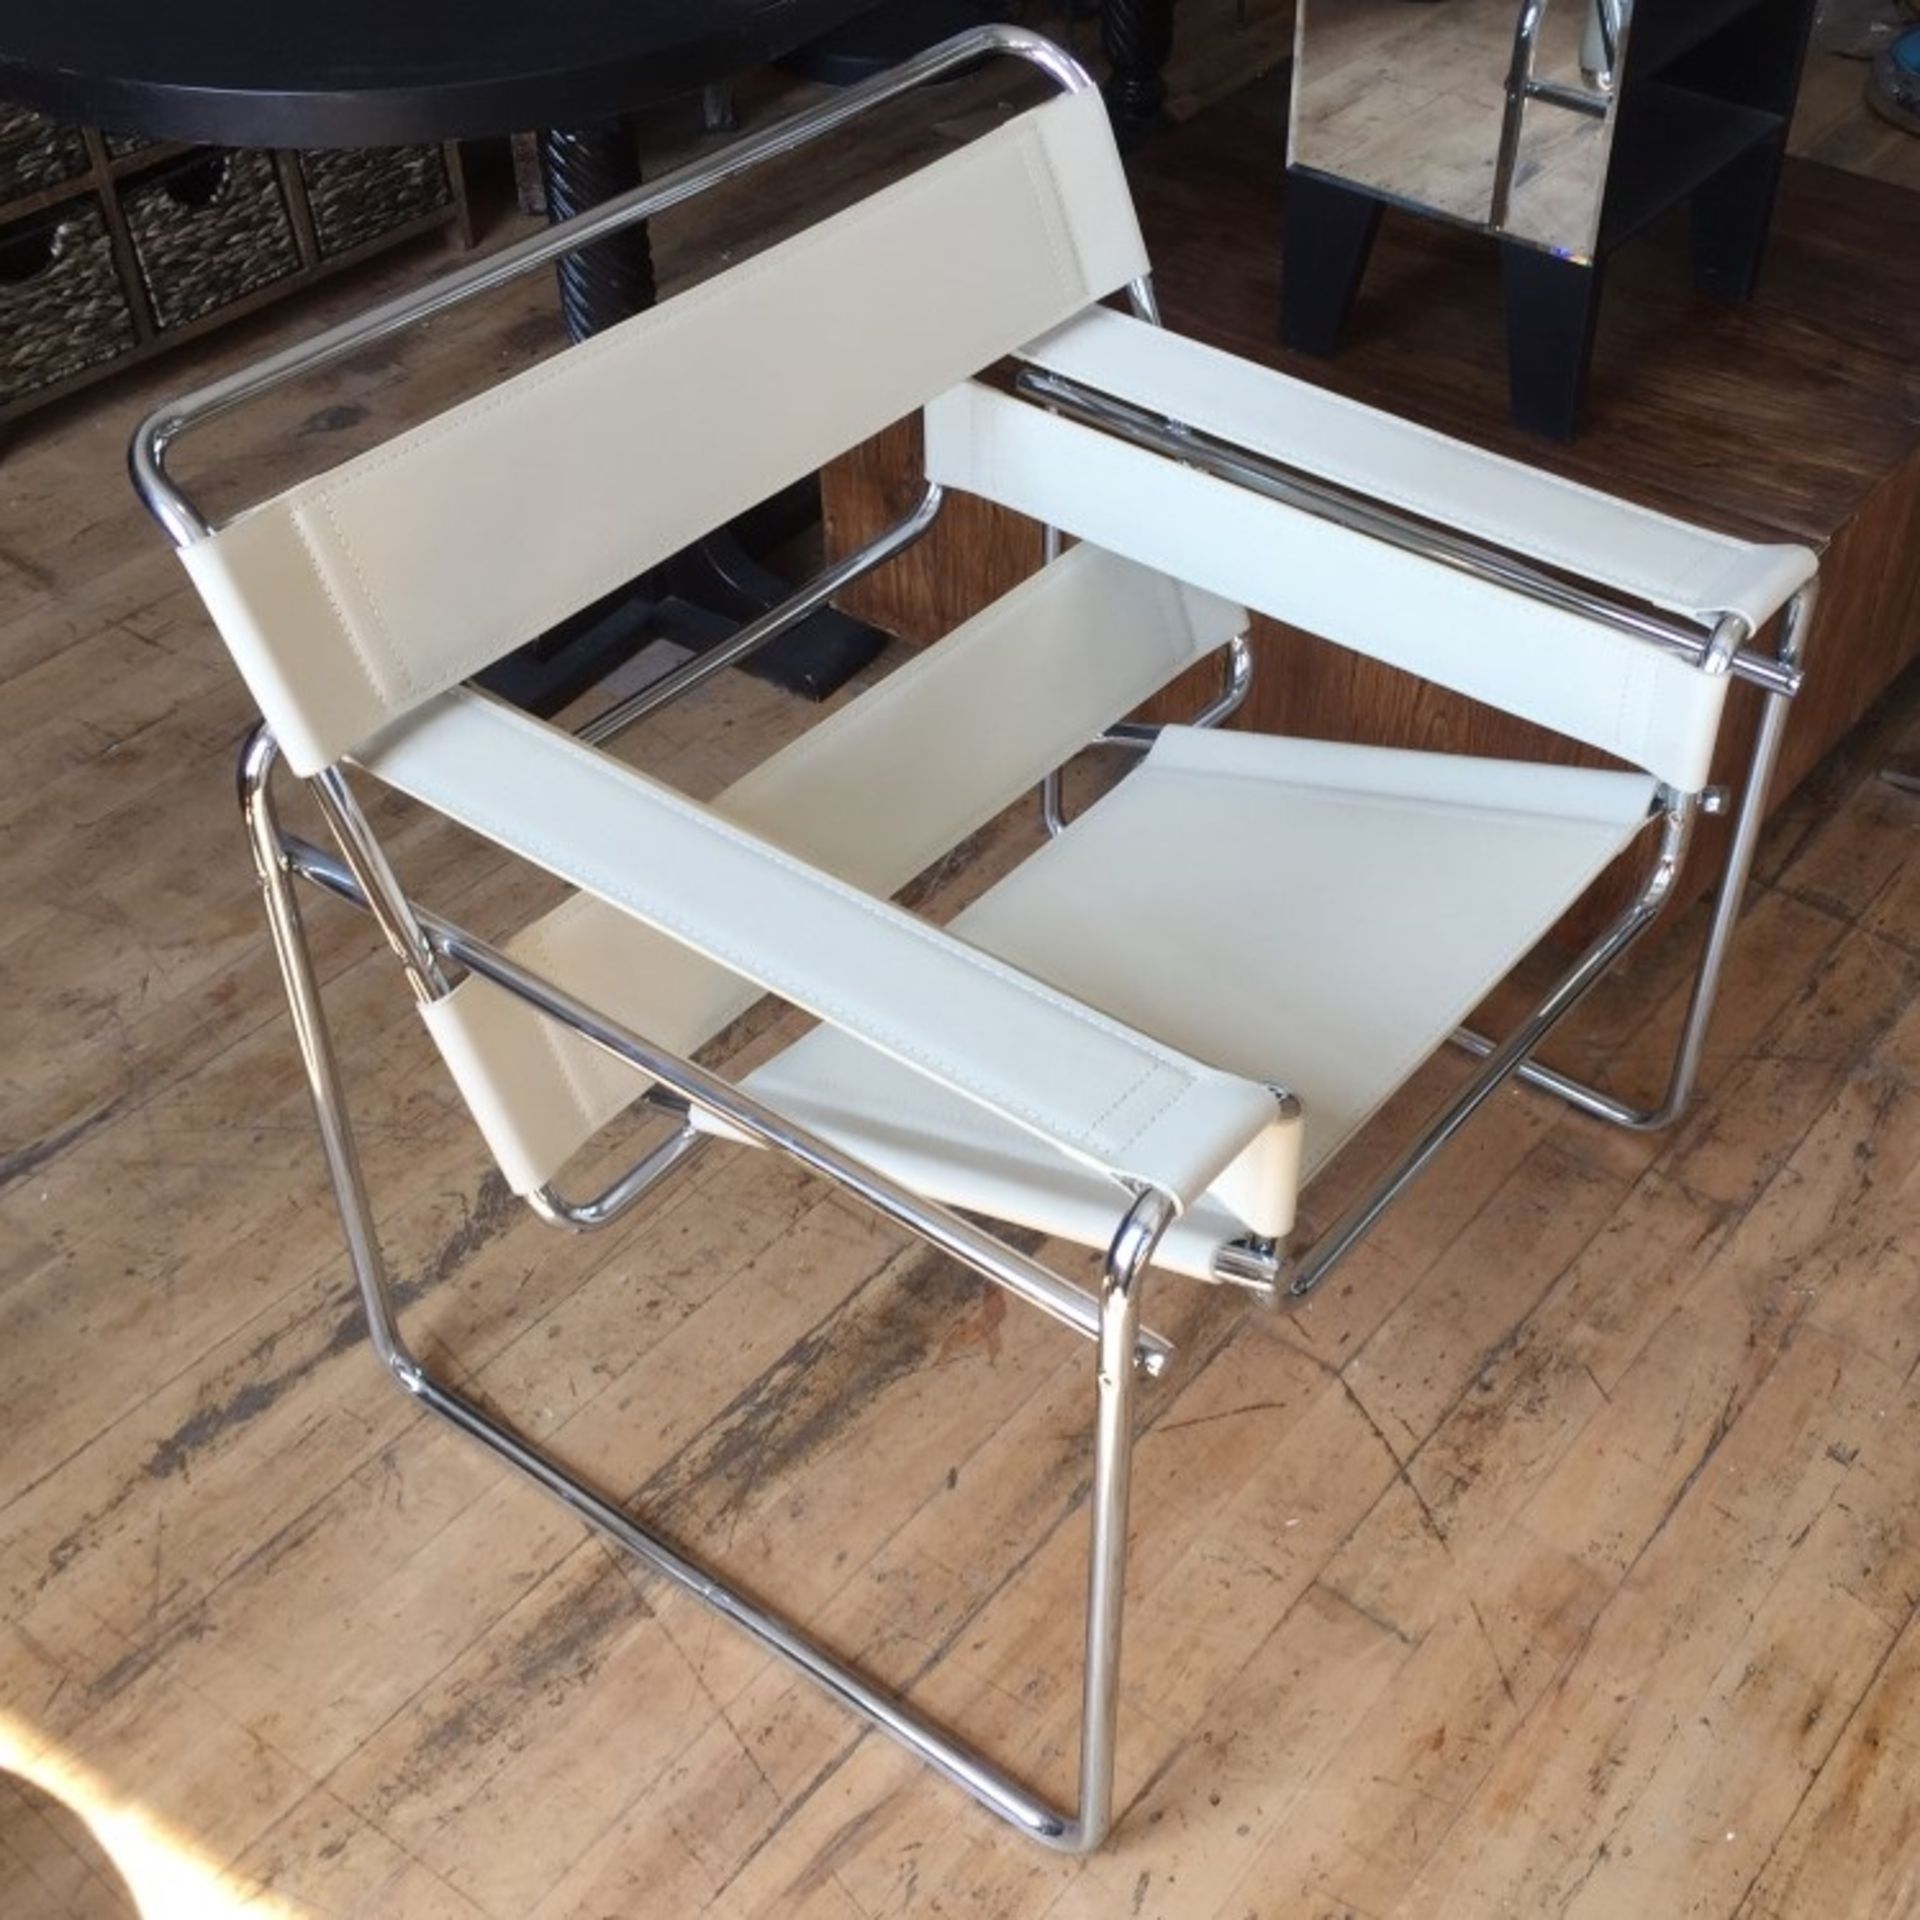 1 x Exquisite Designer Chair By Arne Jacobson Design - Colour: Cream - Dimensions: 80 x 65 x